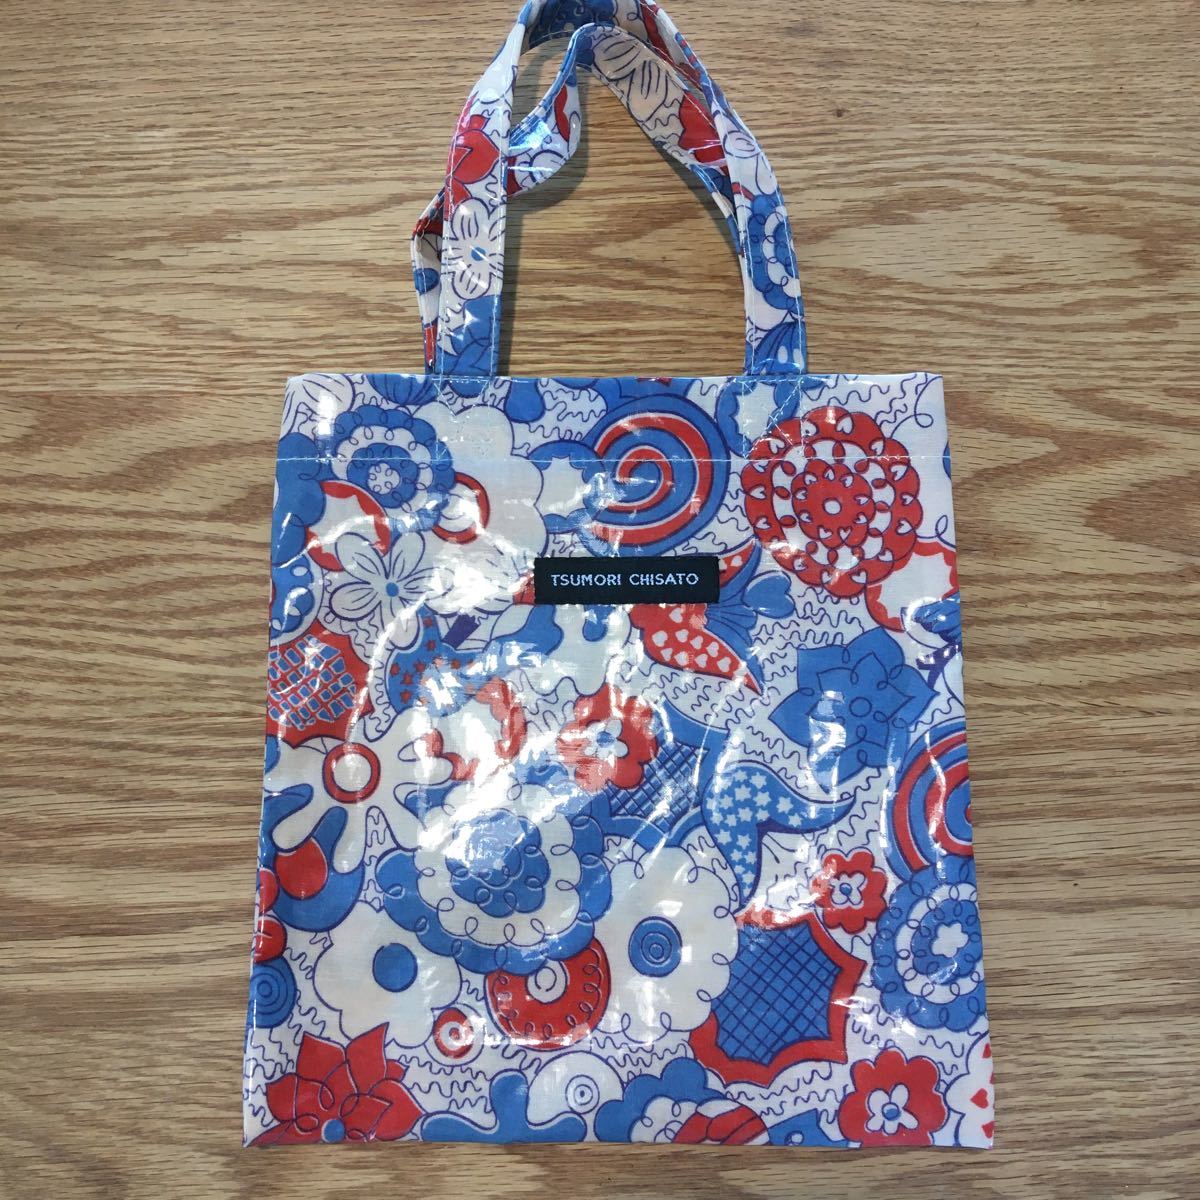  Tsumori Chisato appendix floral print tote bag Mini unused 